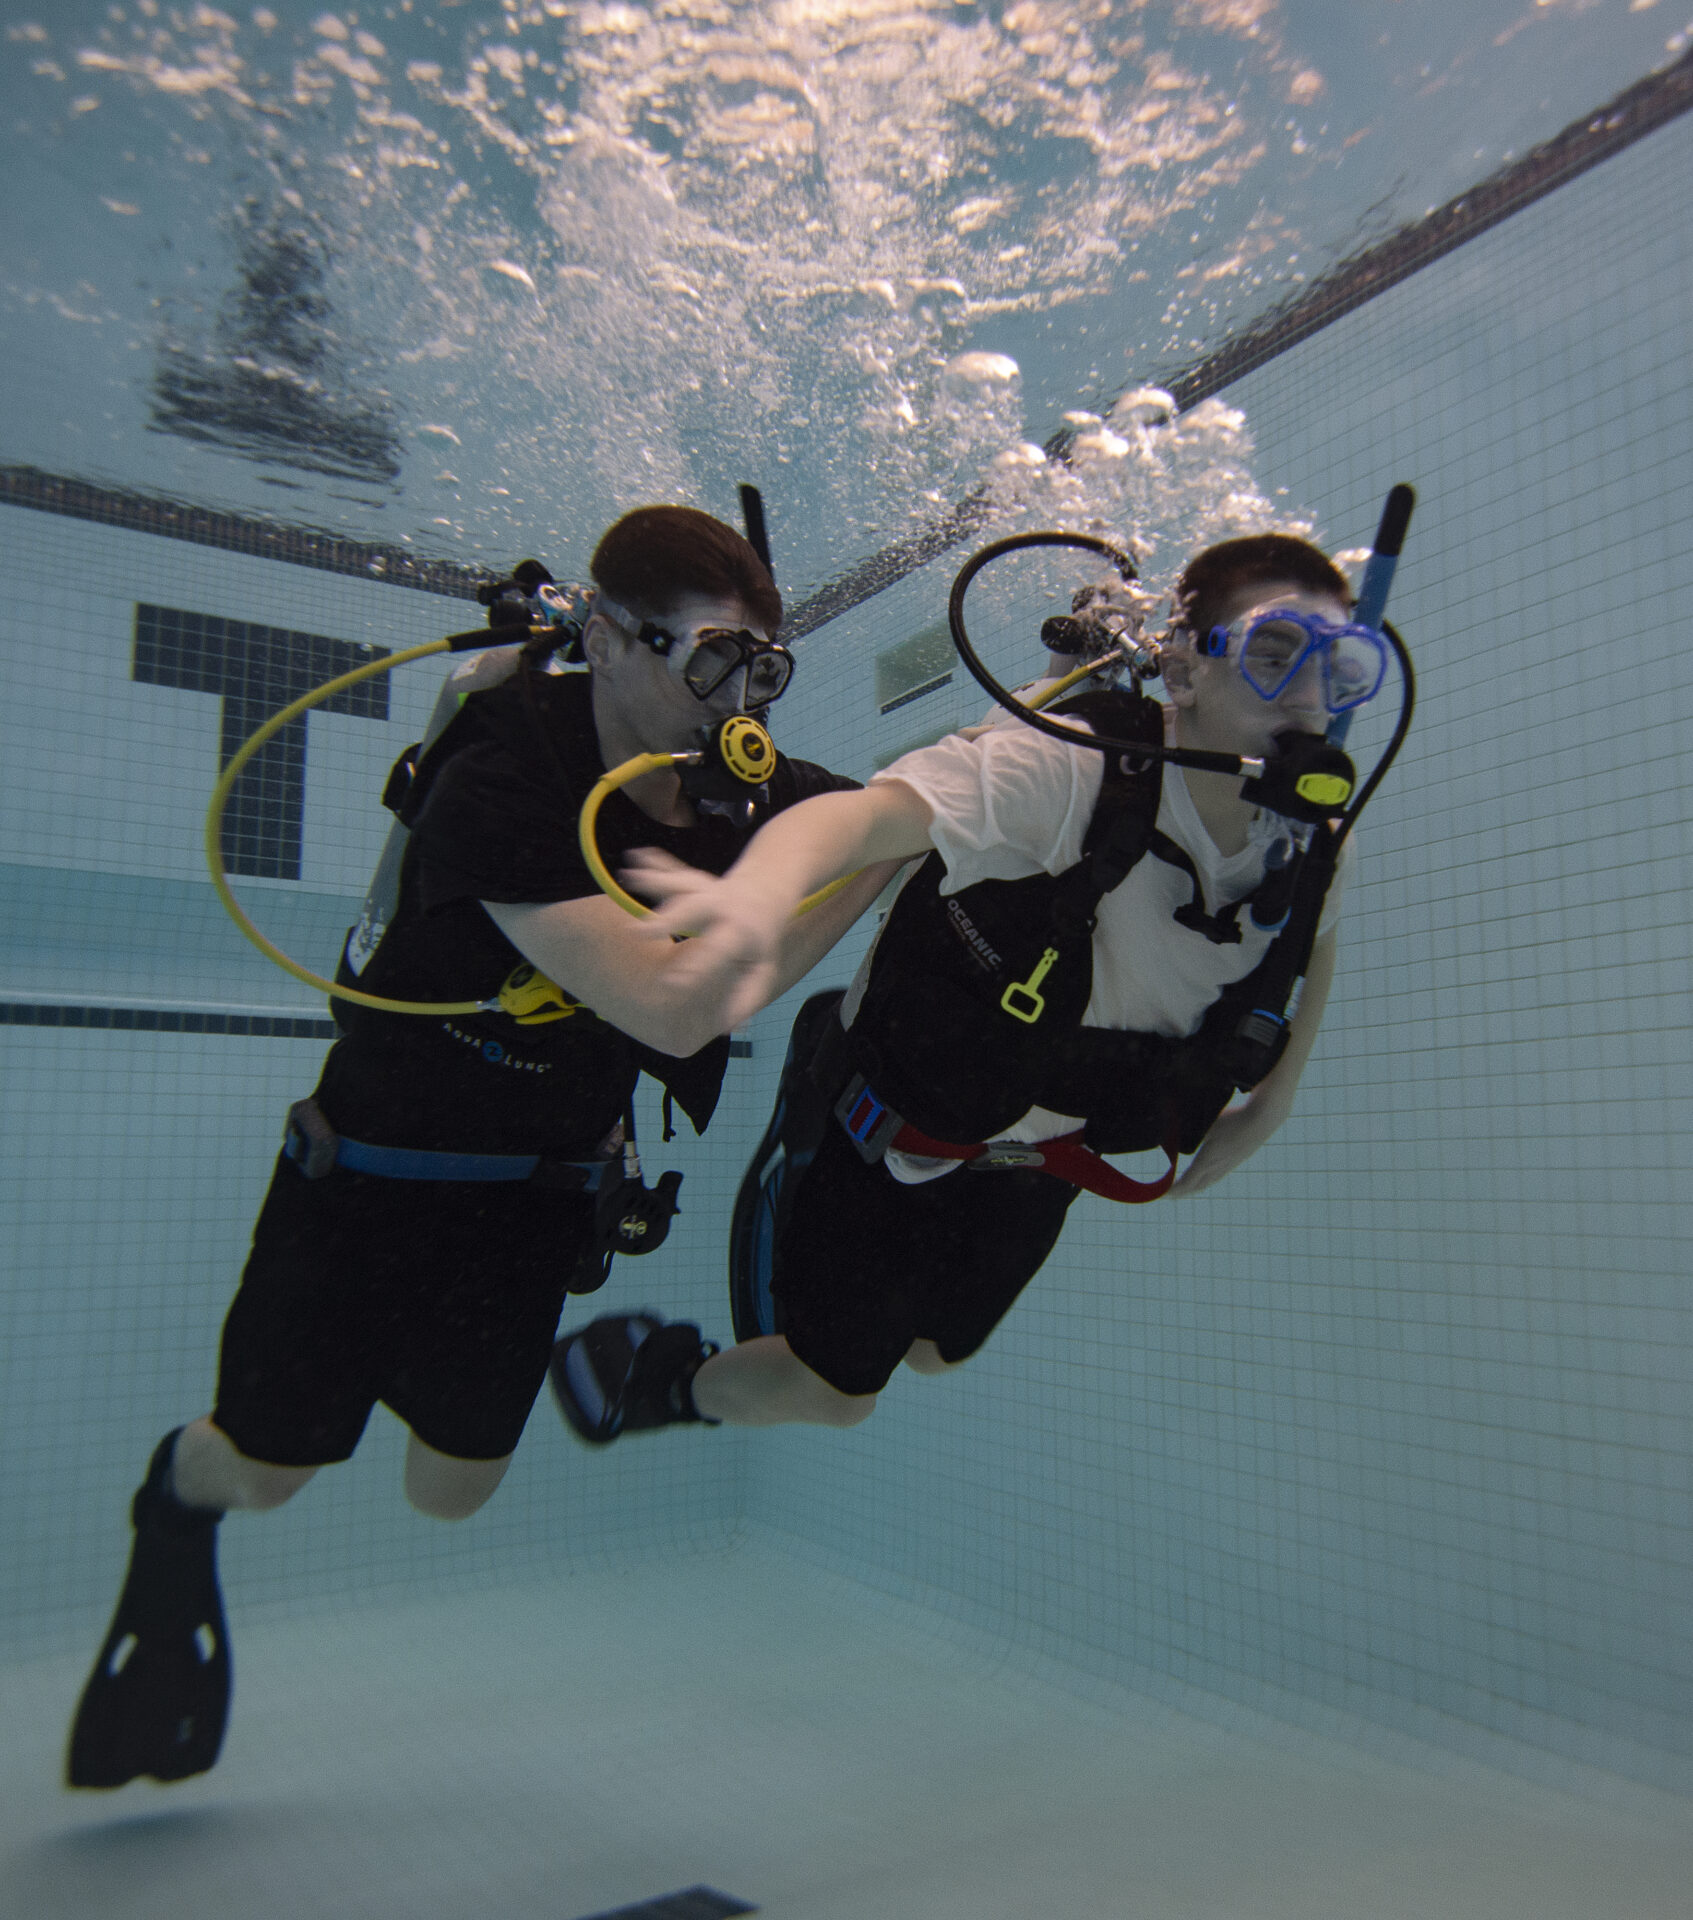 Students scuba diving